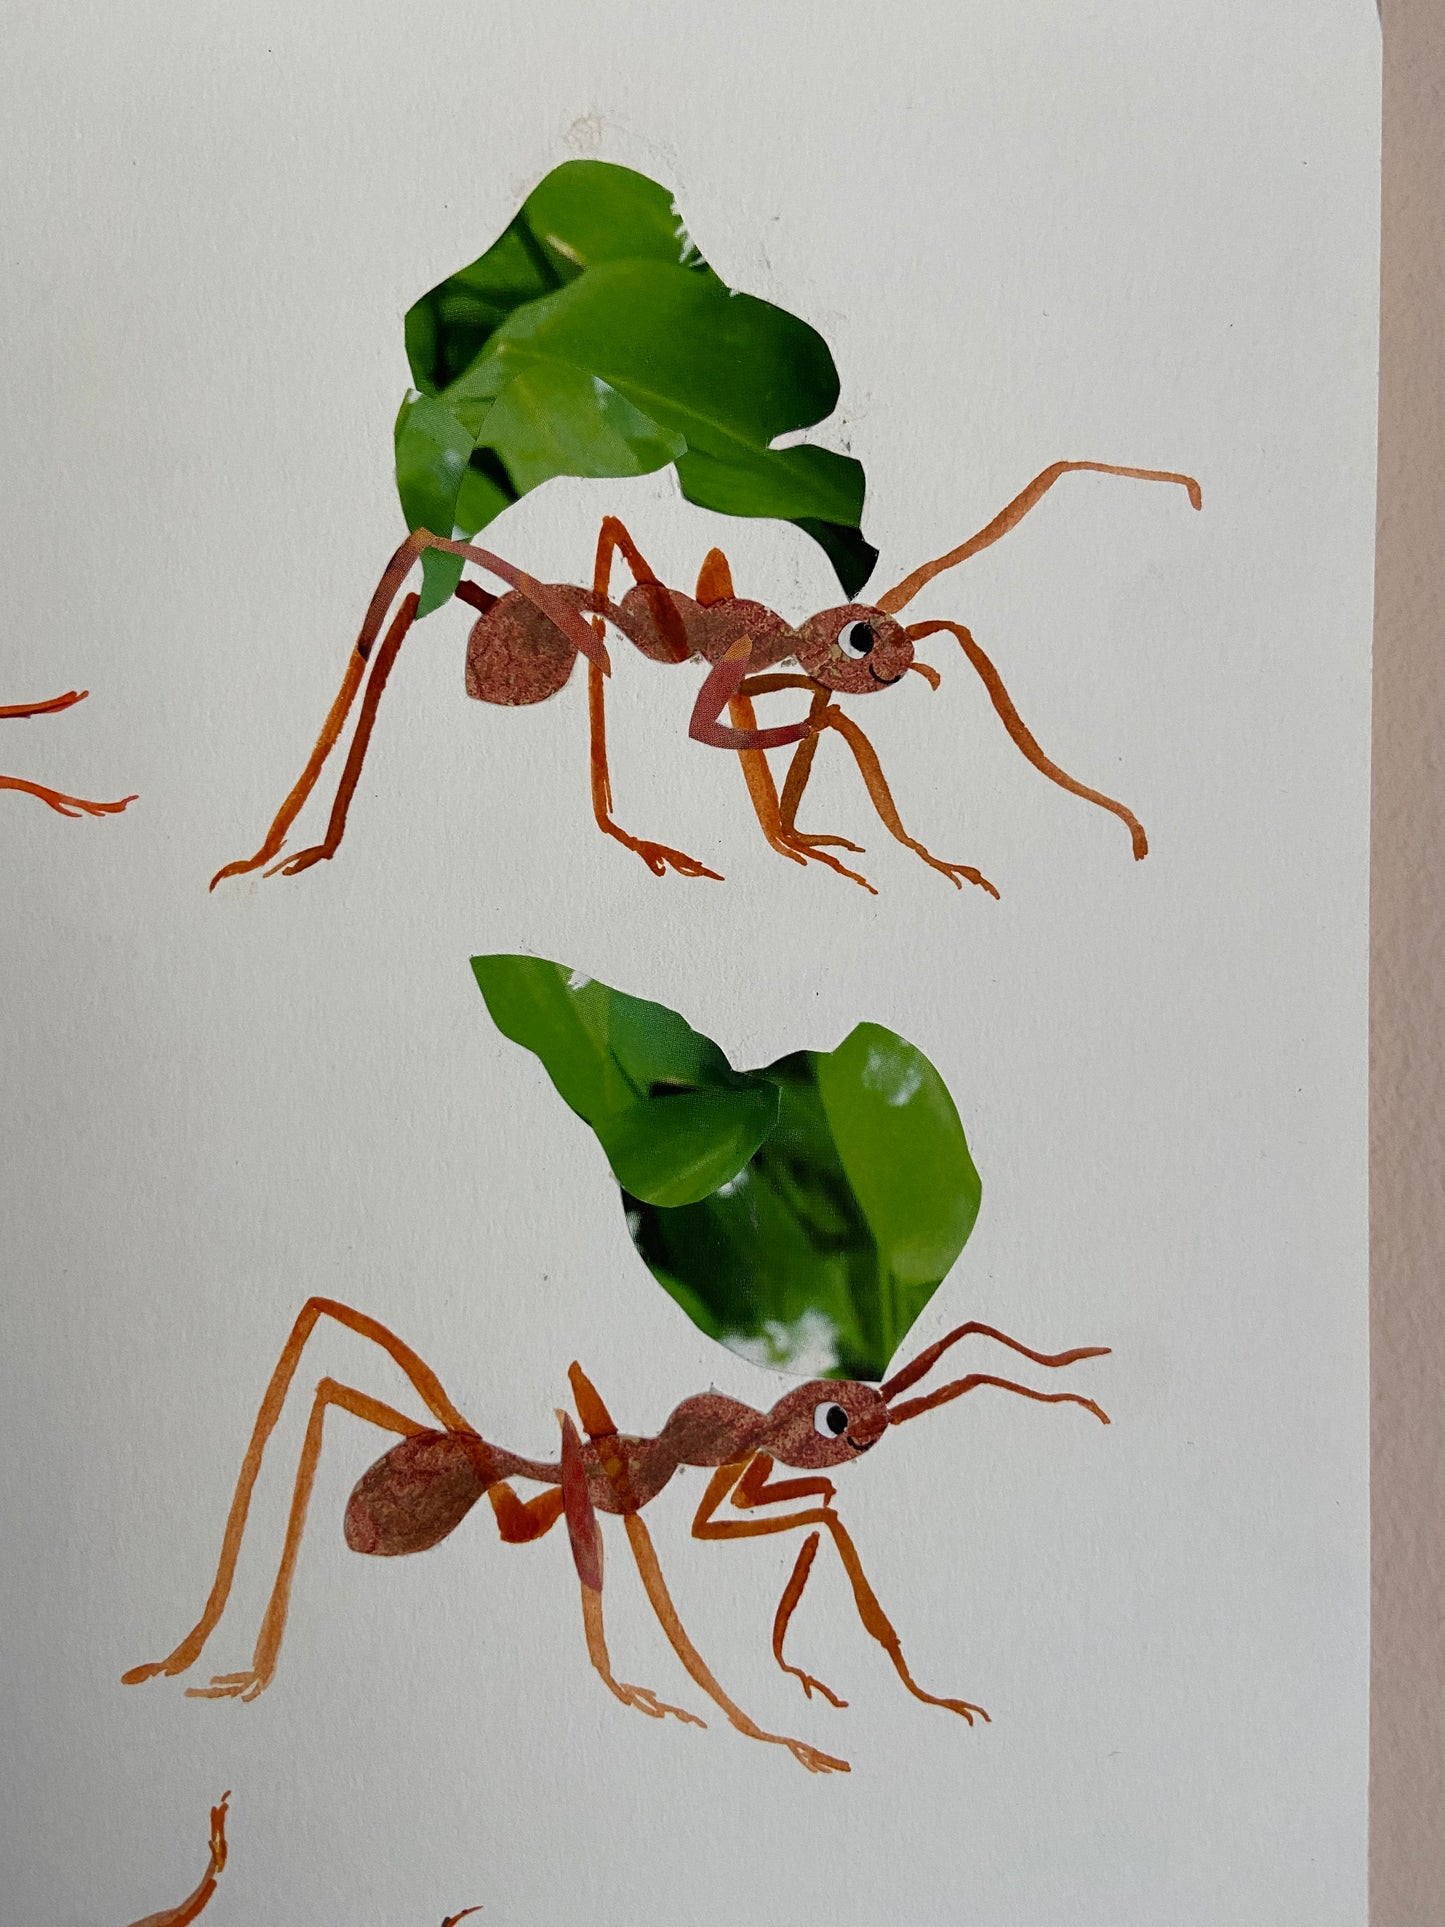 Art Sale - Lots of Ants - Original Mixed Media Illustration